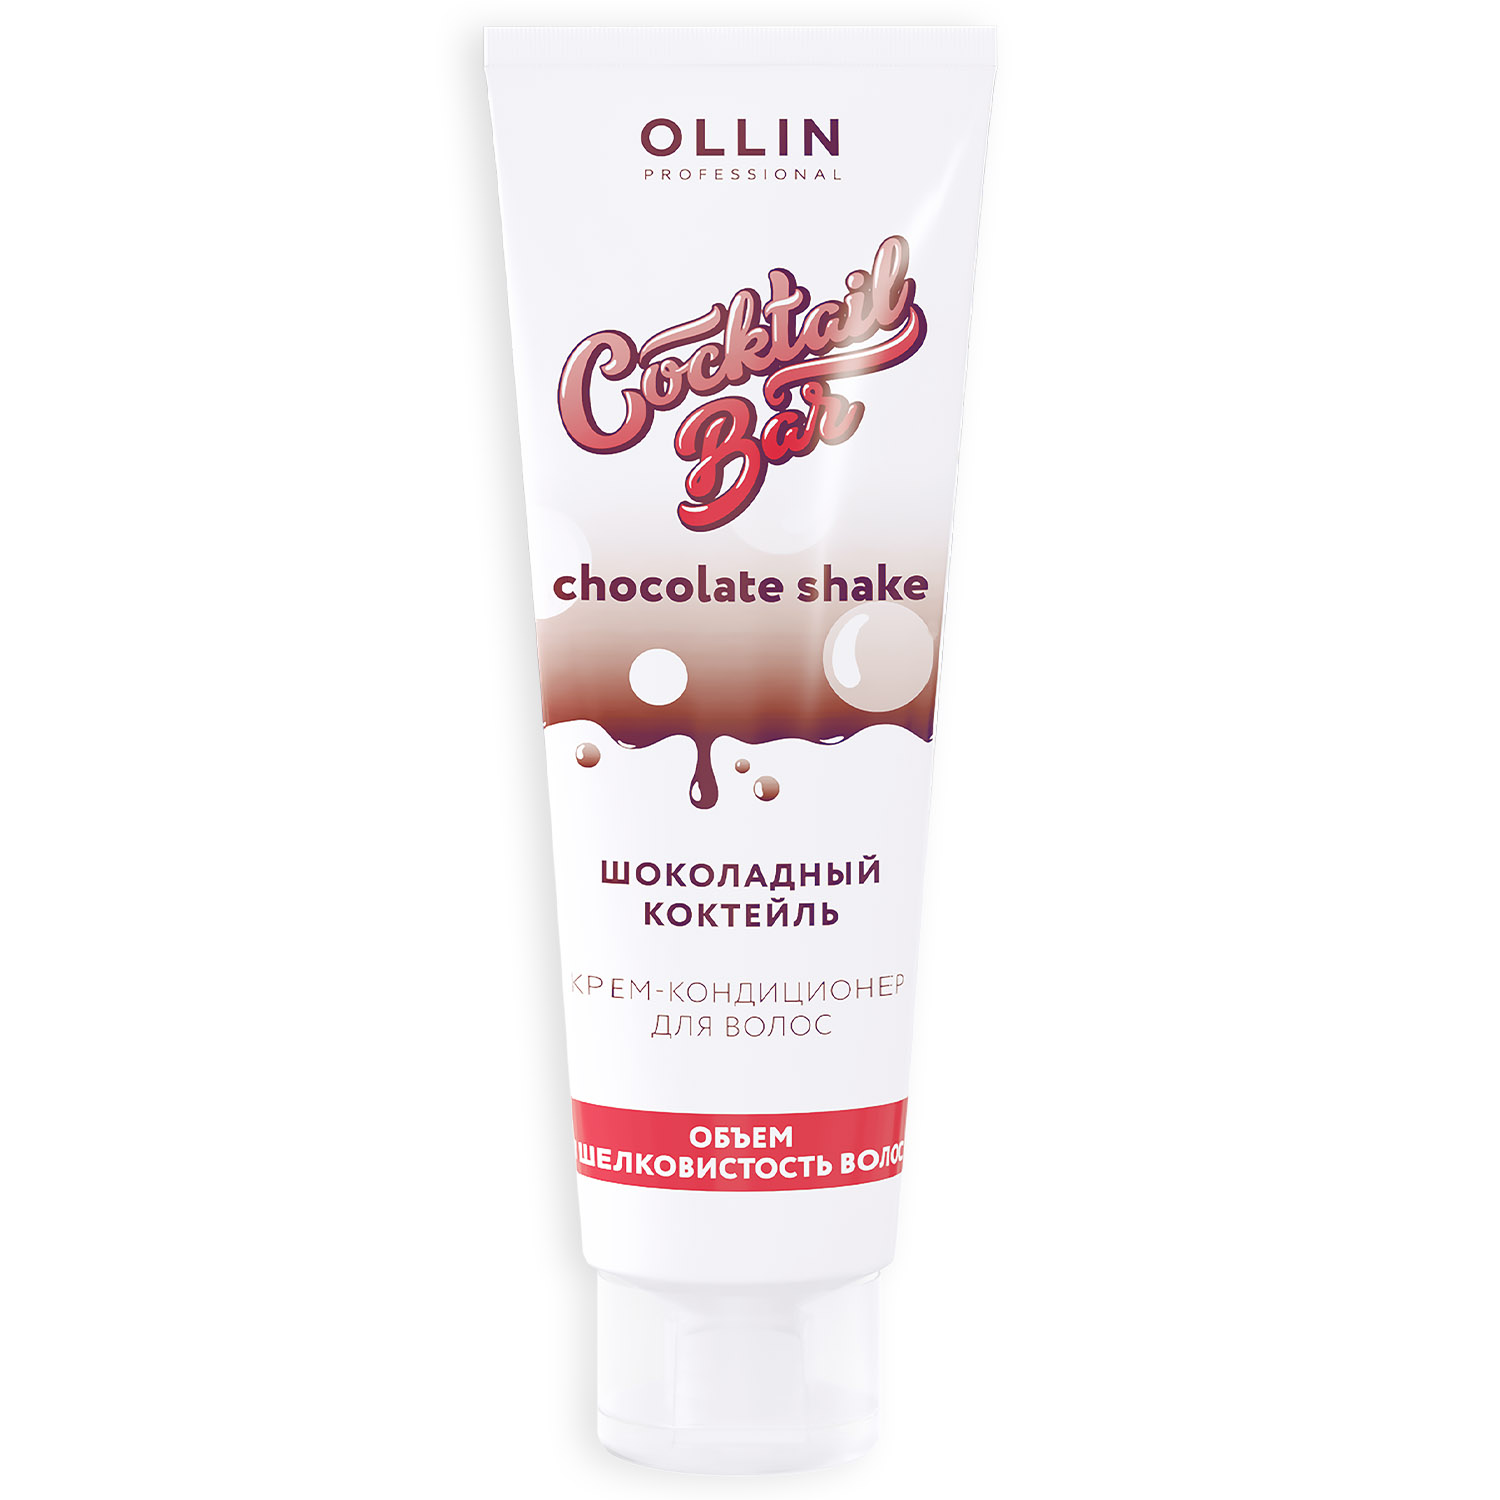 Ollin Professional Крем-кондиционер Шоколадный коктейль для объёма и шелковистости волос, 250 мл (Ollin Professional, Cocktail Bar)